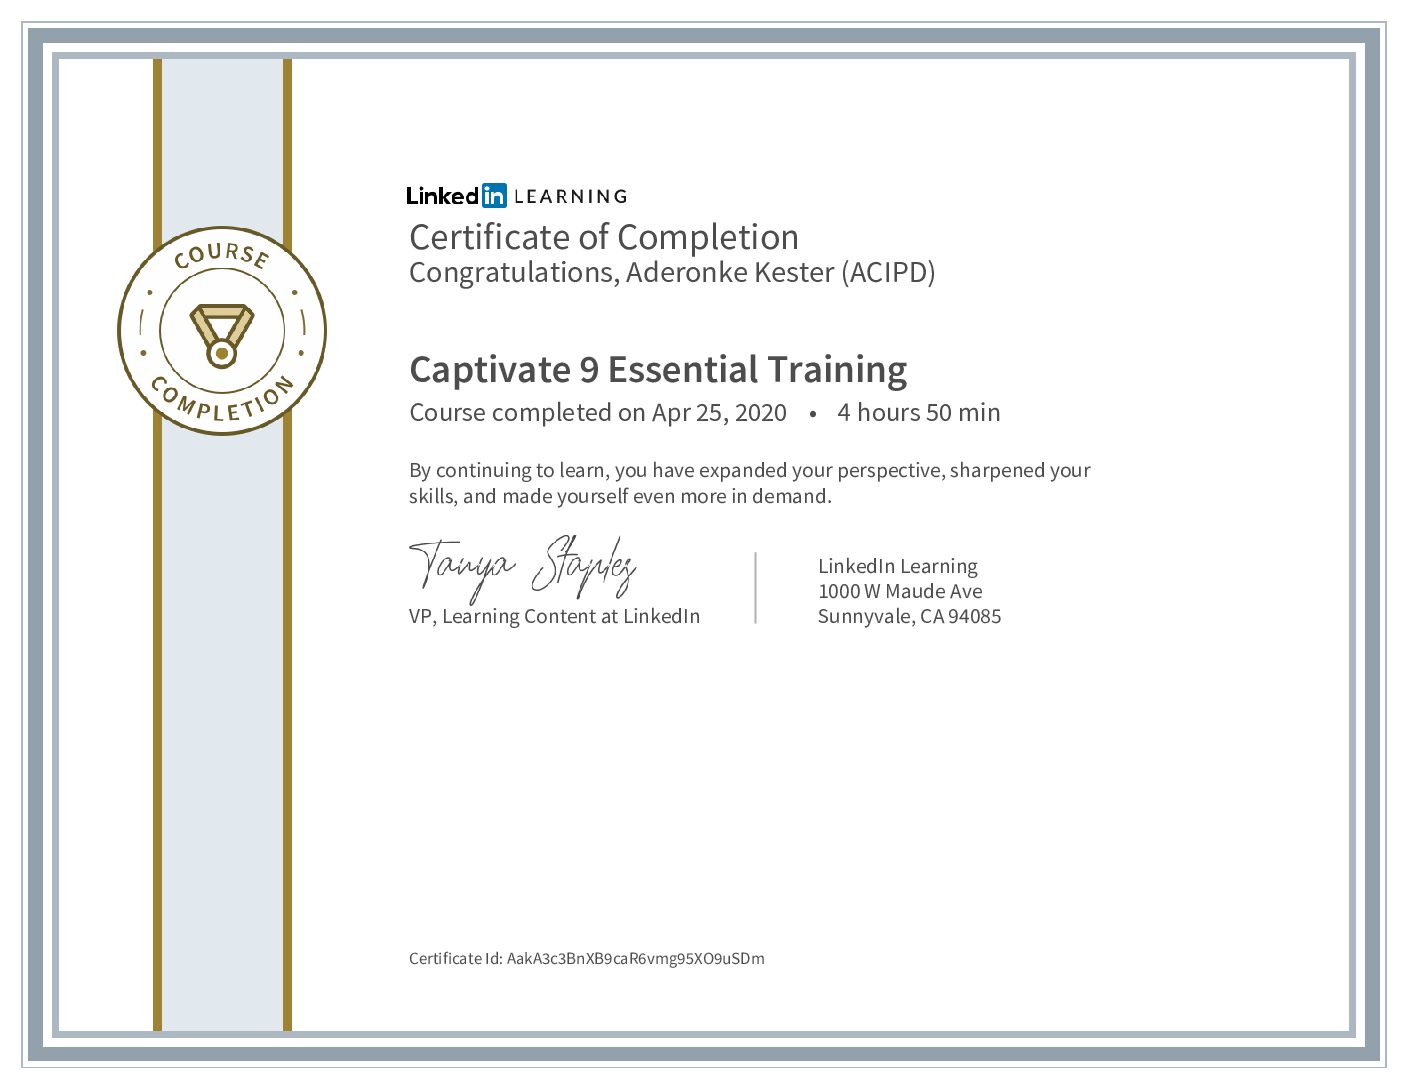 CertificateOfCompletion_Captivate 9 Essential Training